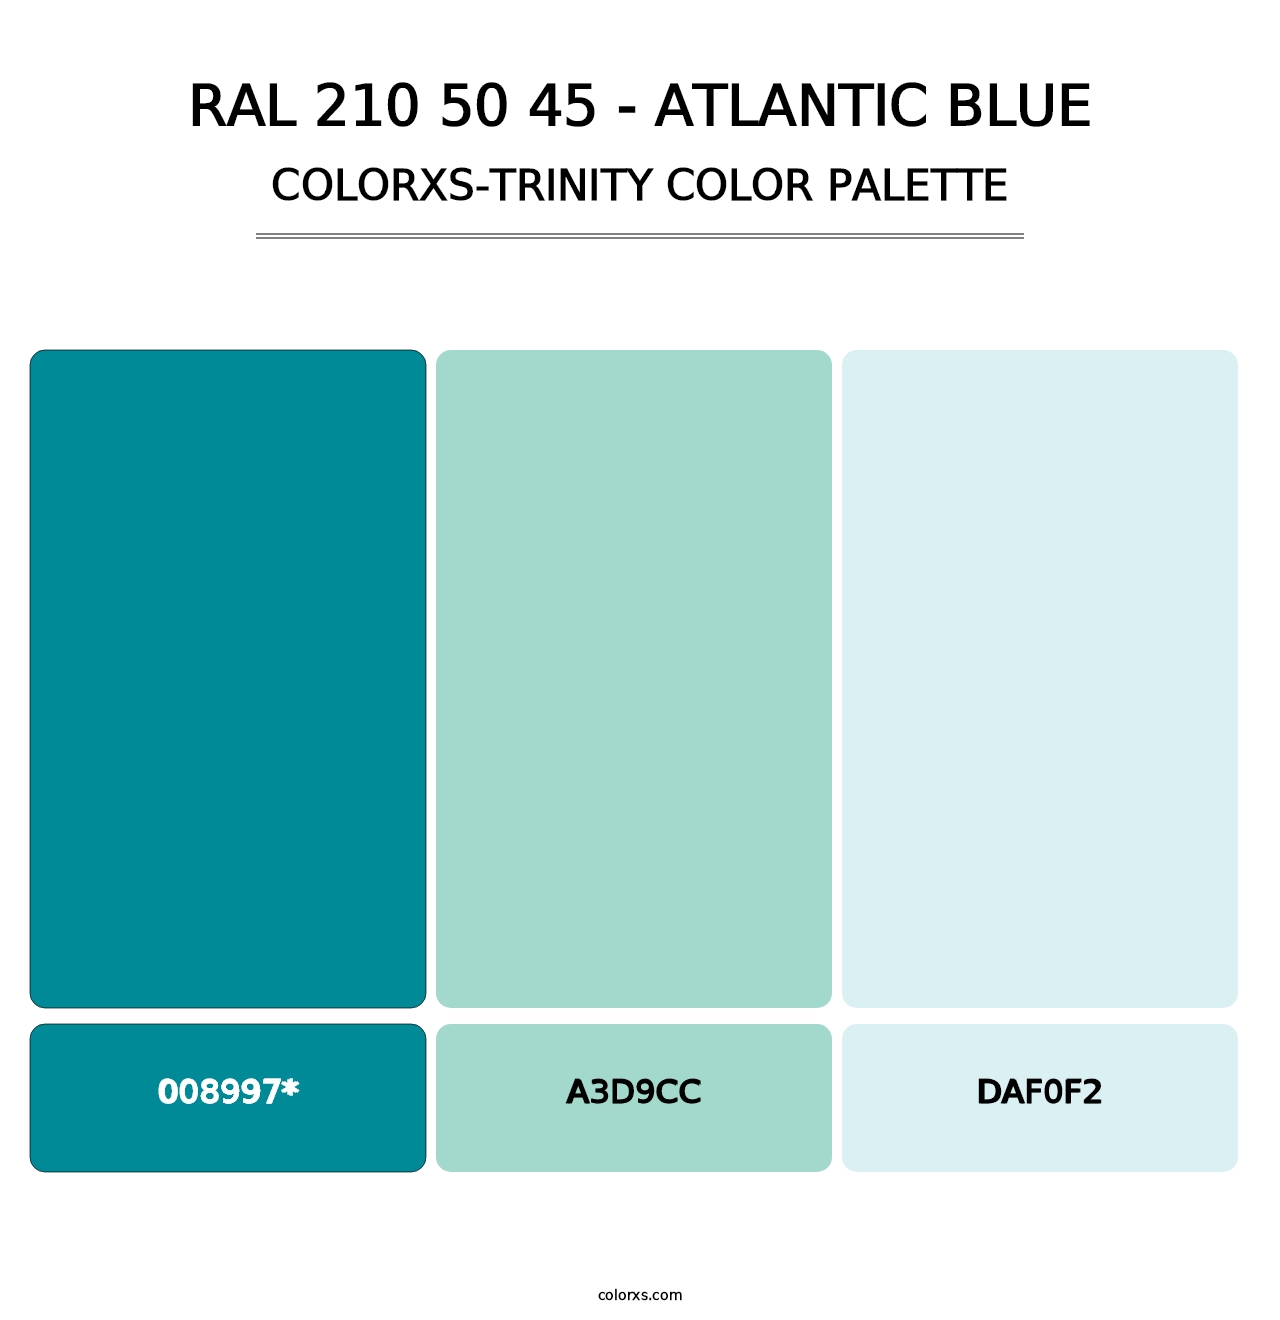 RAL 210 50 45 - Atlantic Blue - Colorxs Trinity Palette